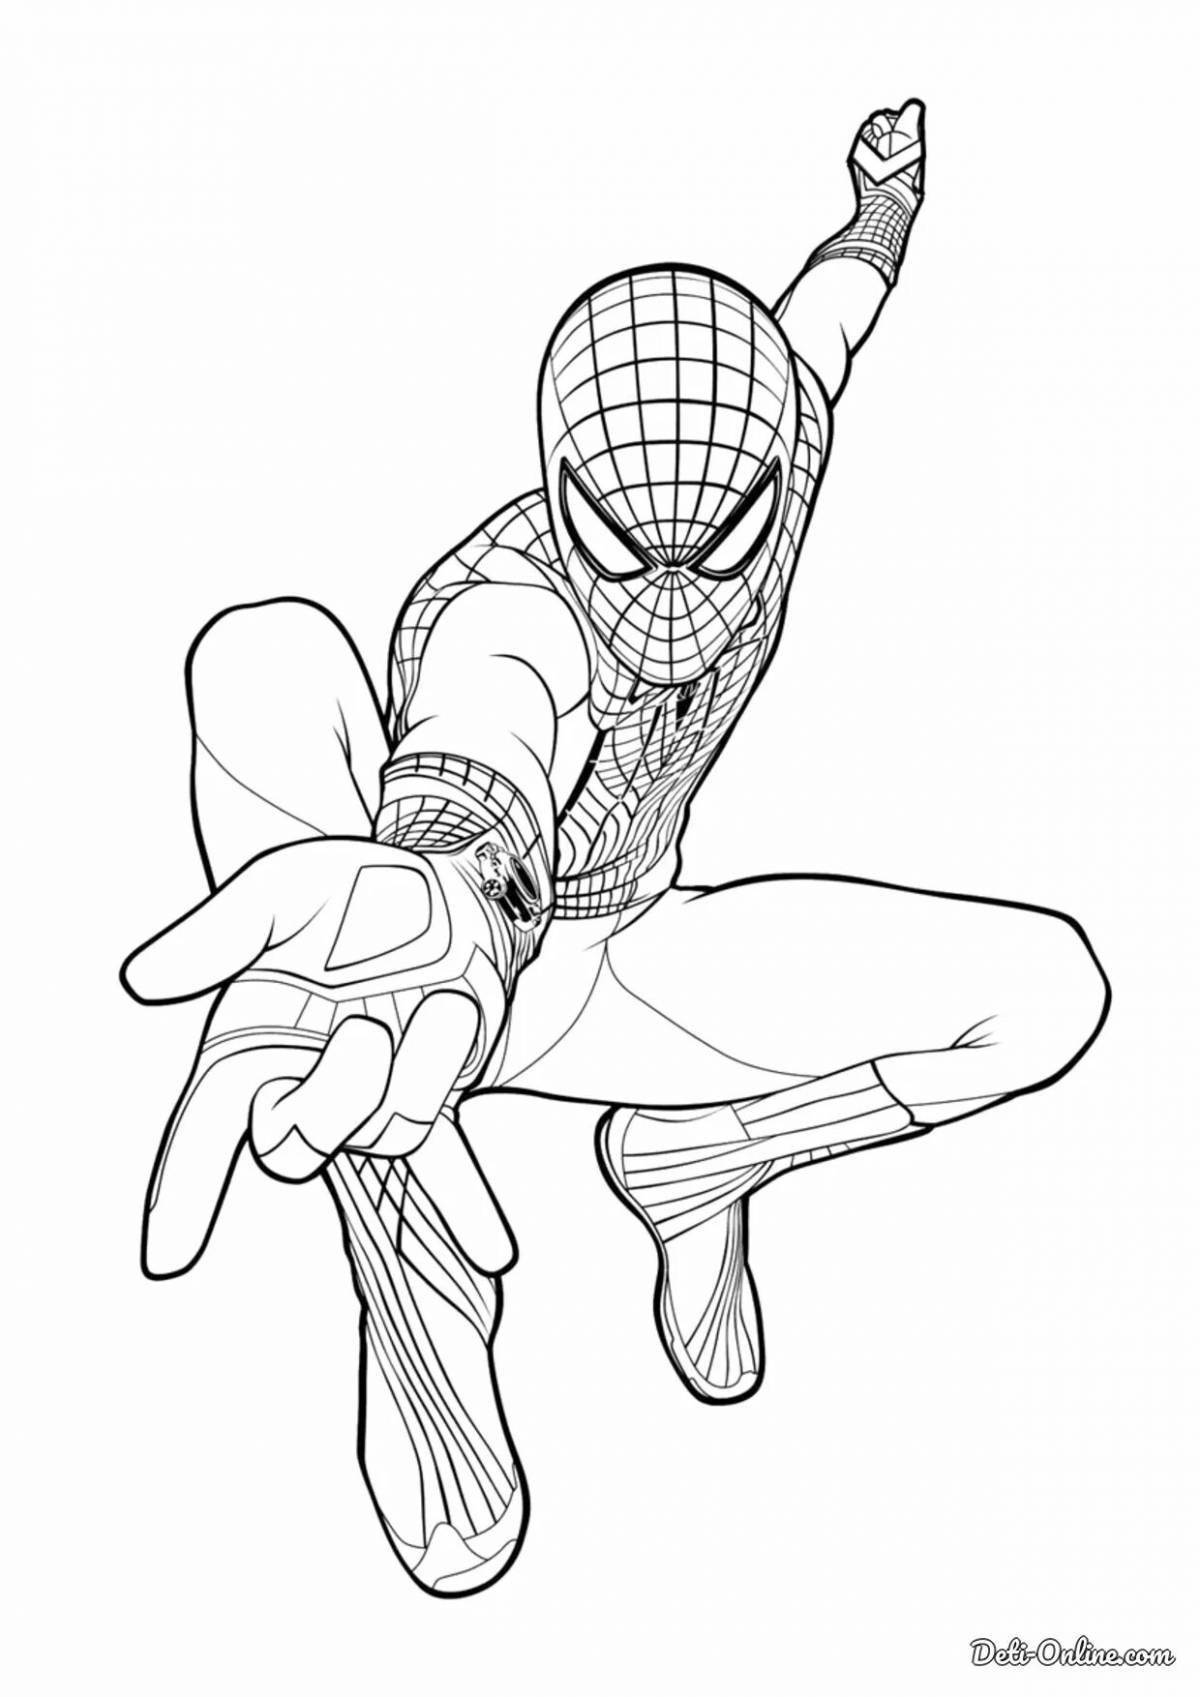 Impressive spider-man coloring book